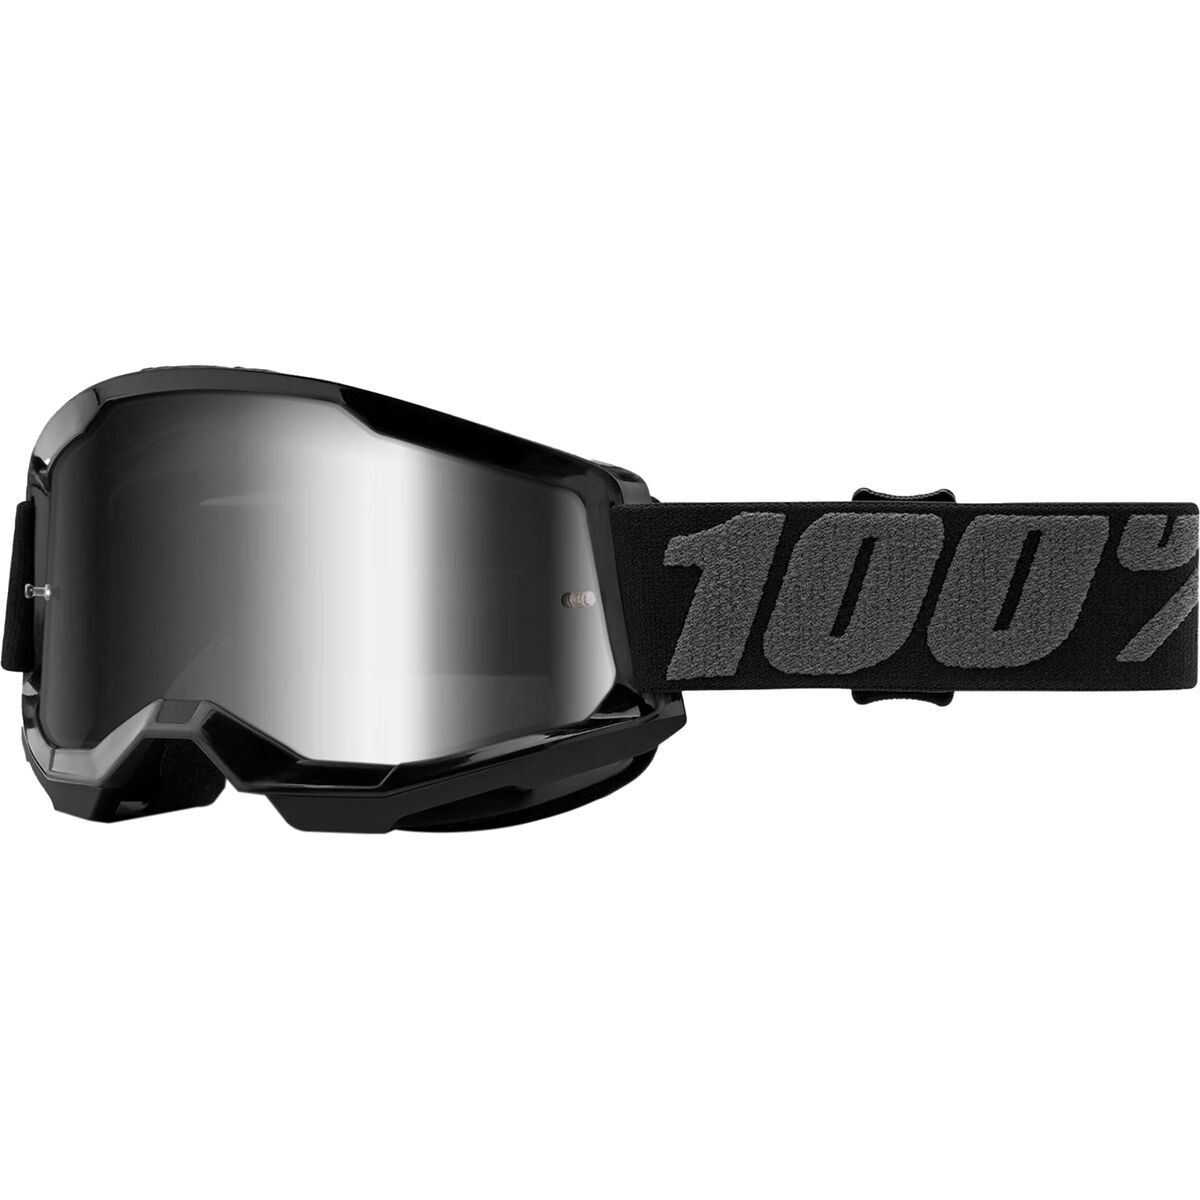 100% Strata 2 Mirrored Lens Goggles